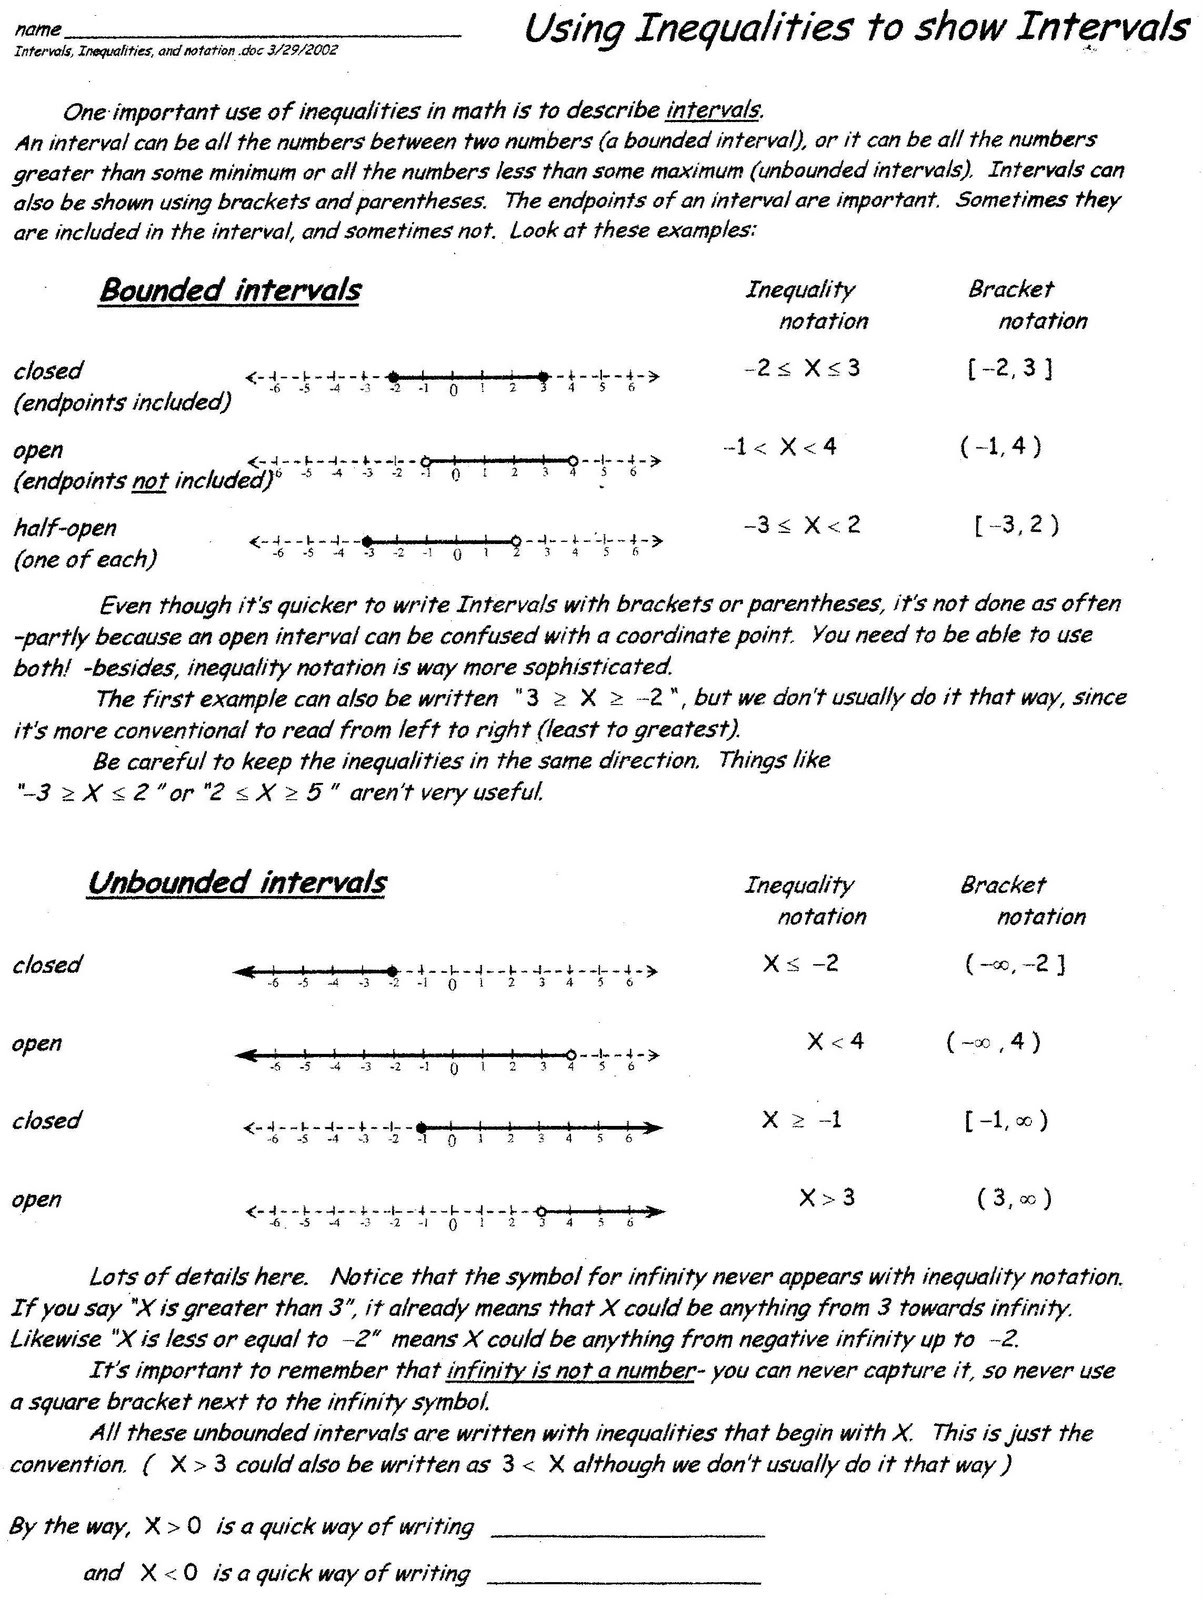 Function Notation Worksheet Answers 34 Algebra 1 Function Notation Worksheet Answers Worksheet